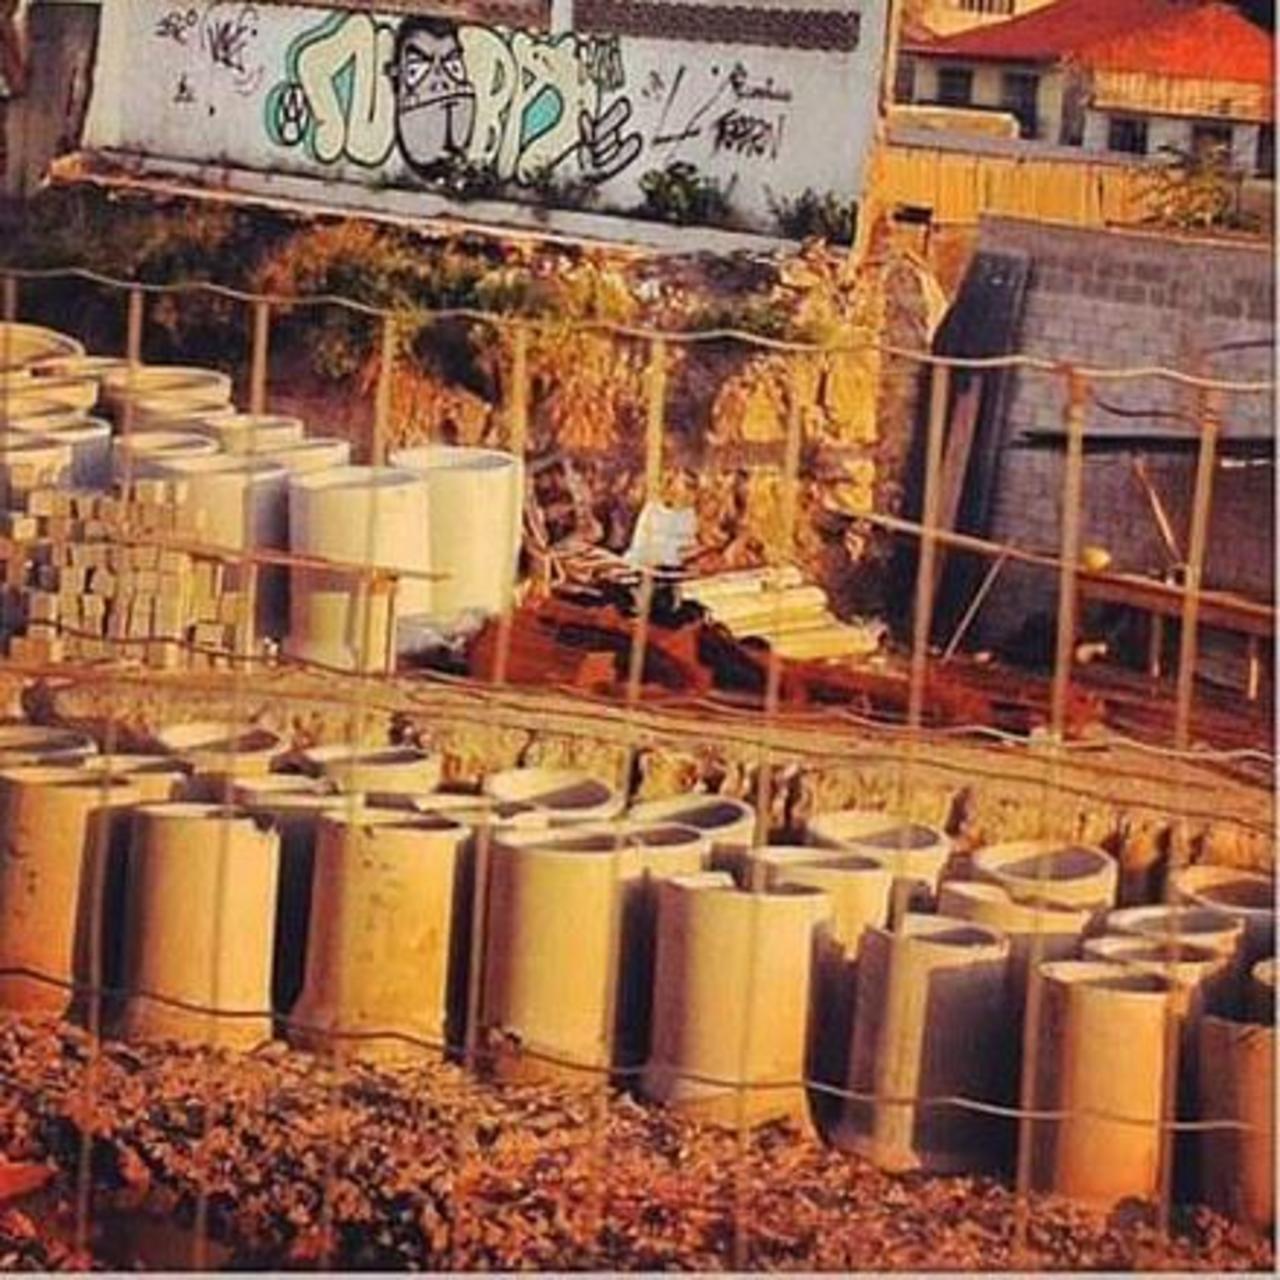 Obras do brt #graffiti #artistasurbanoscrew #streetartrio #streetart #graffiti #rjvandal by artistasurbanoscrew http://t.co/CQLRrzzzu7